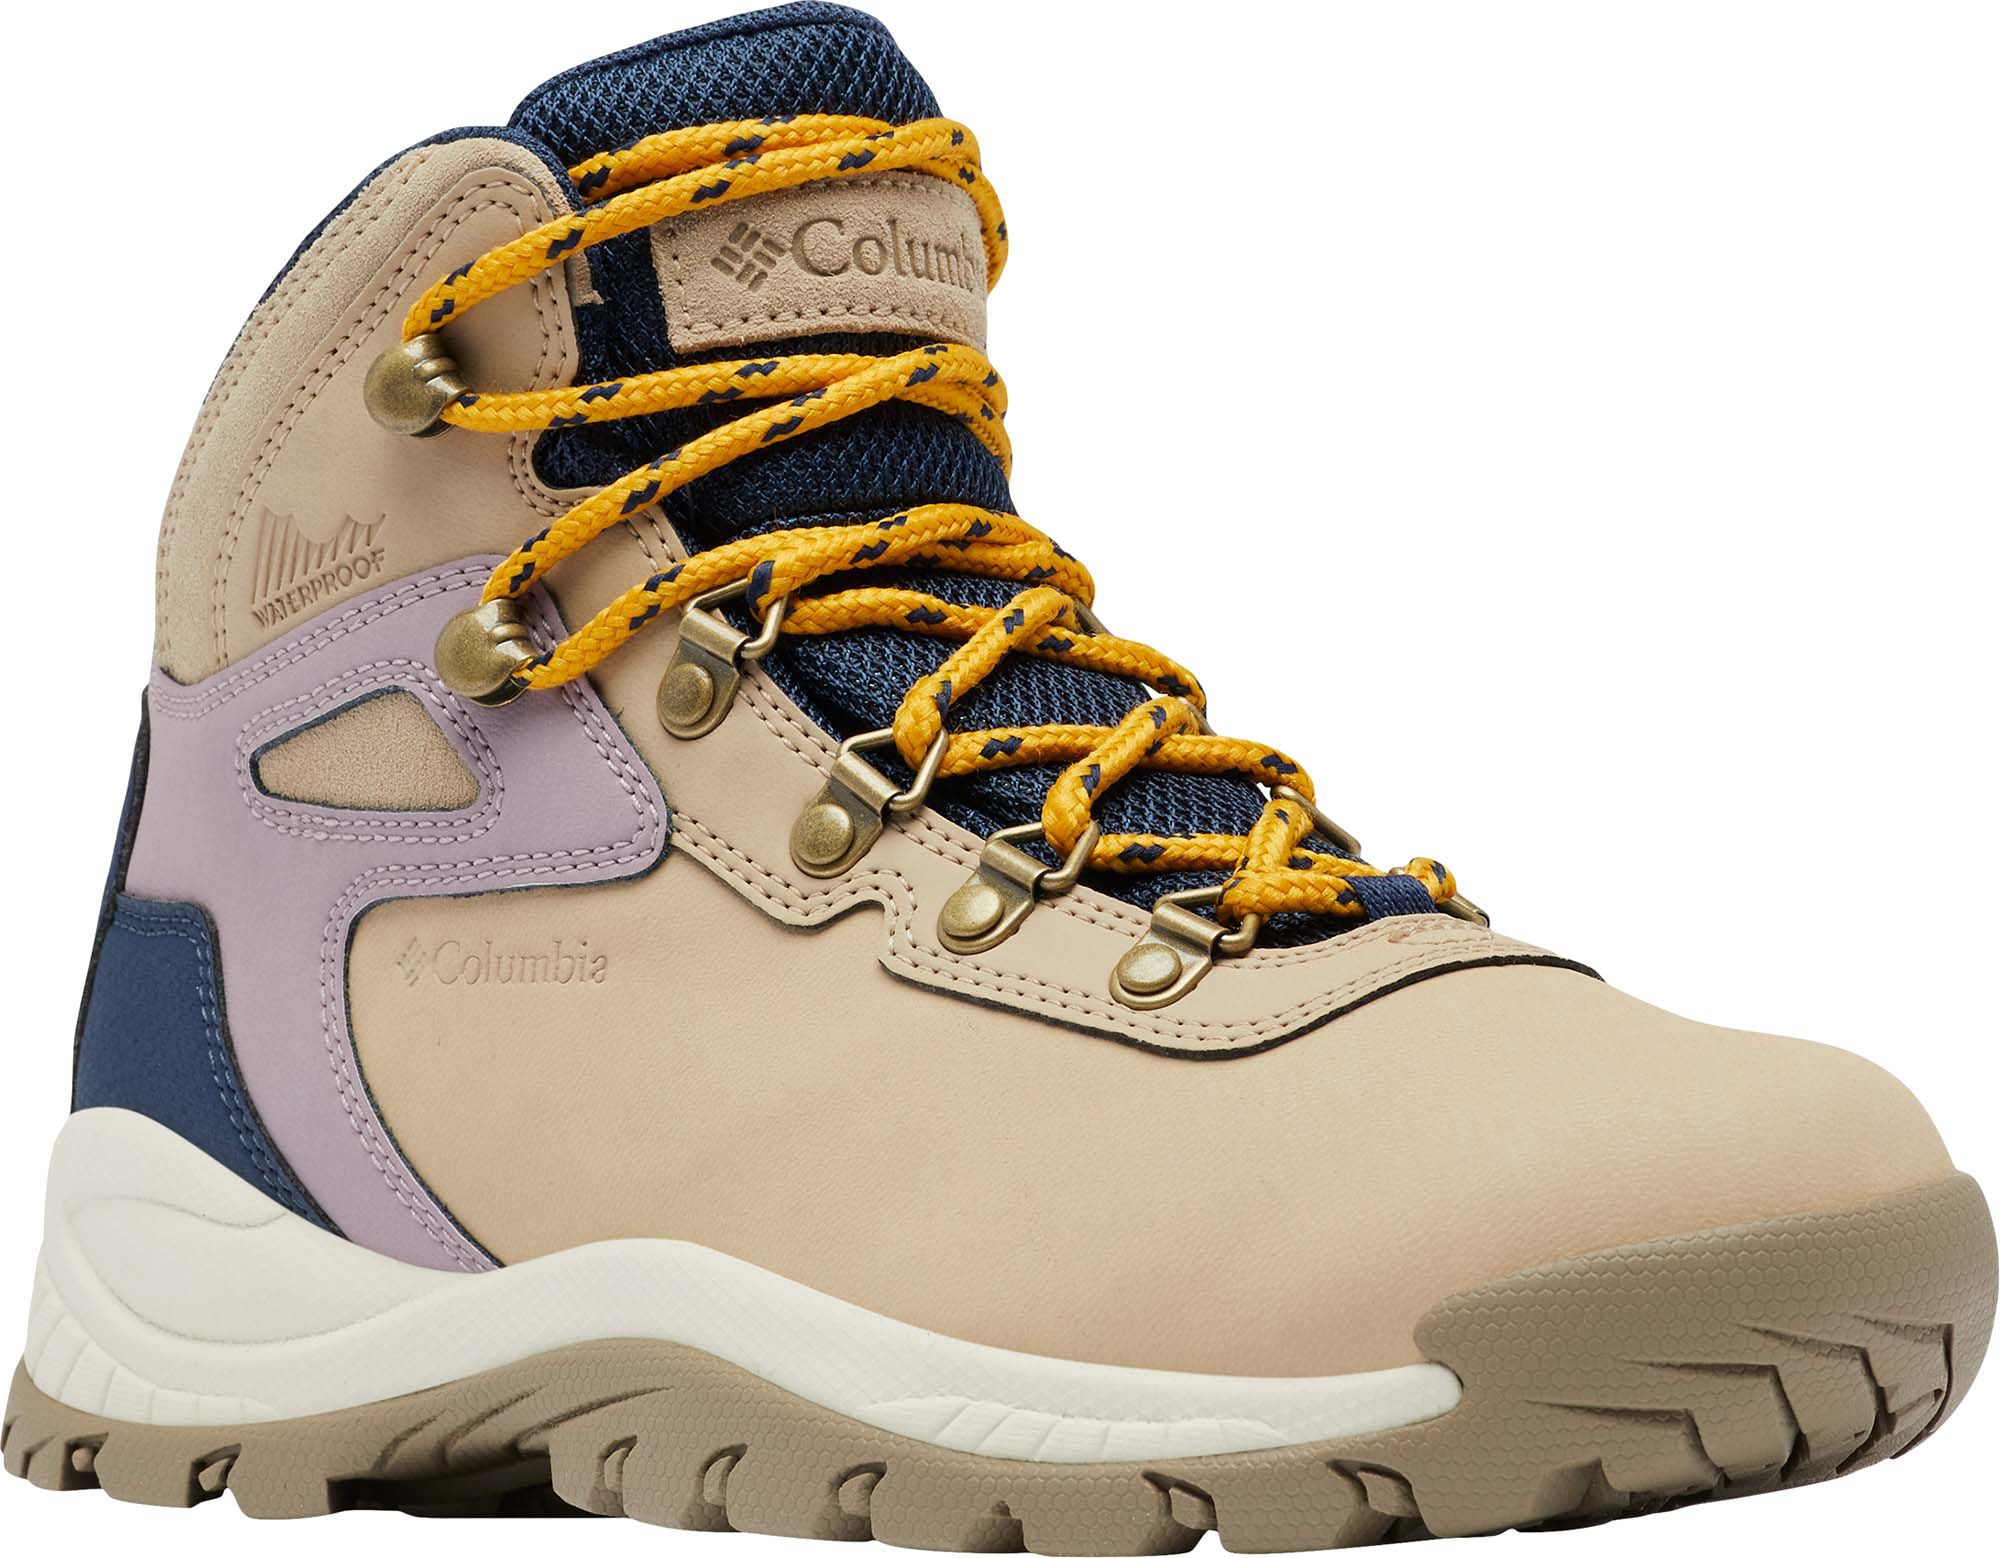 Photos - Trekking Shoes Columbia Women's Newton Ridge Plus Mid Waterproof Hiking Boots, Size 8, An 